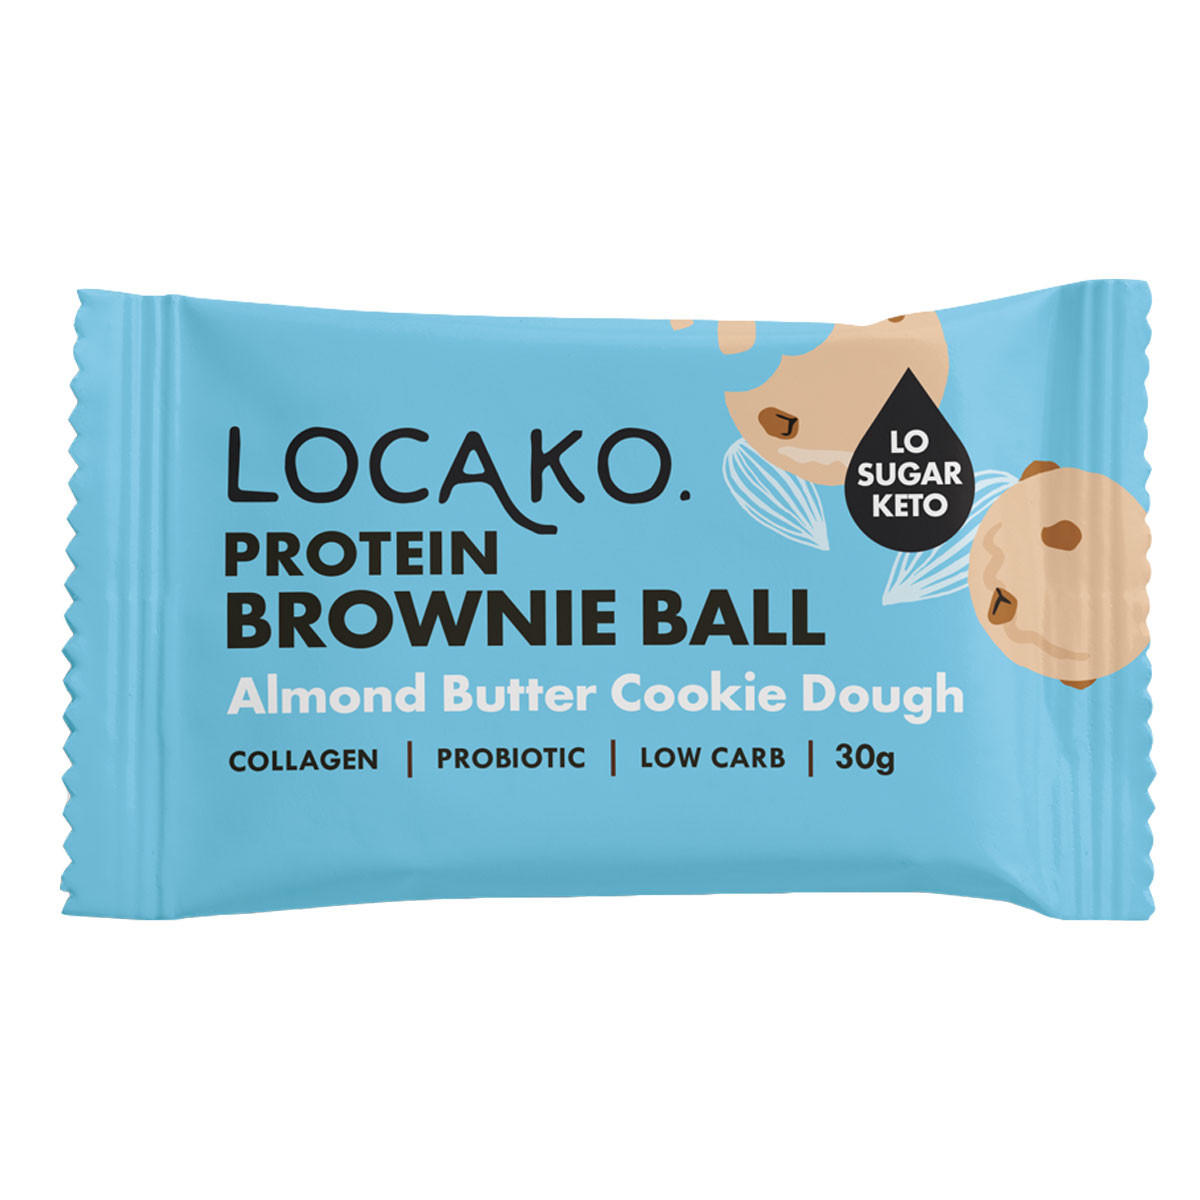 Locako Protein Brownie Ball – Almond Butter Cookie Dough